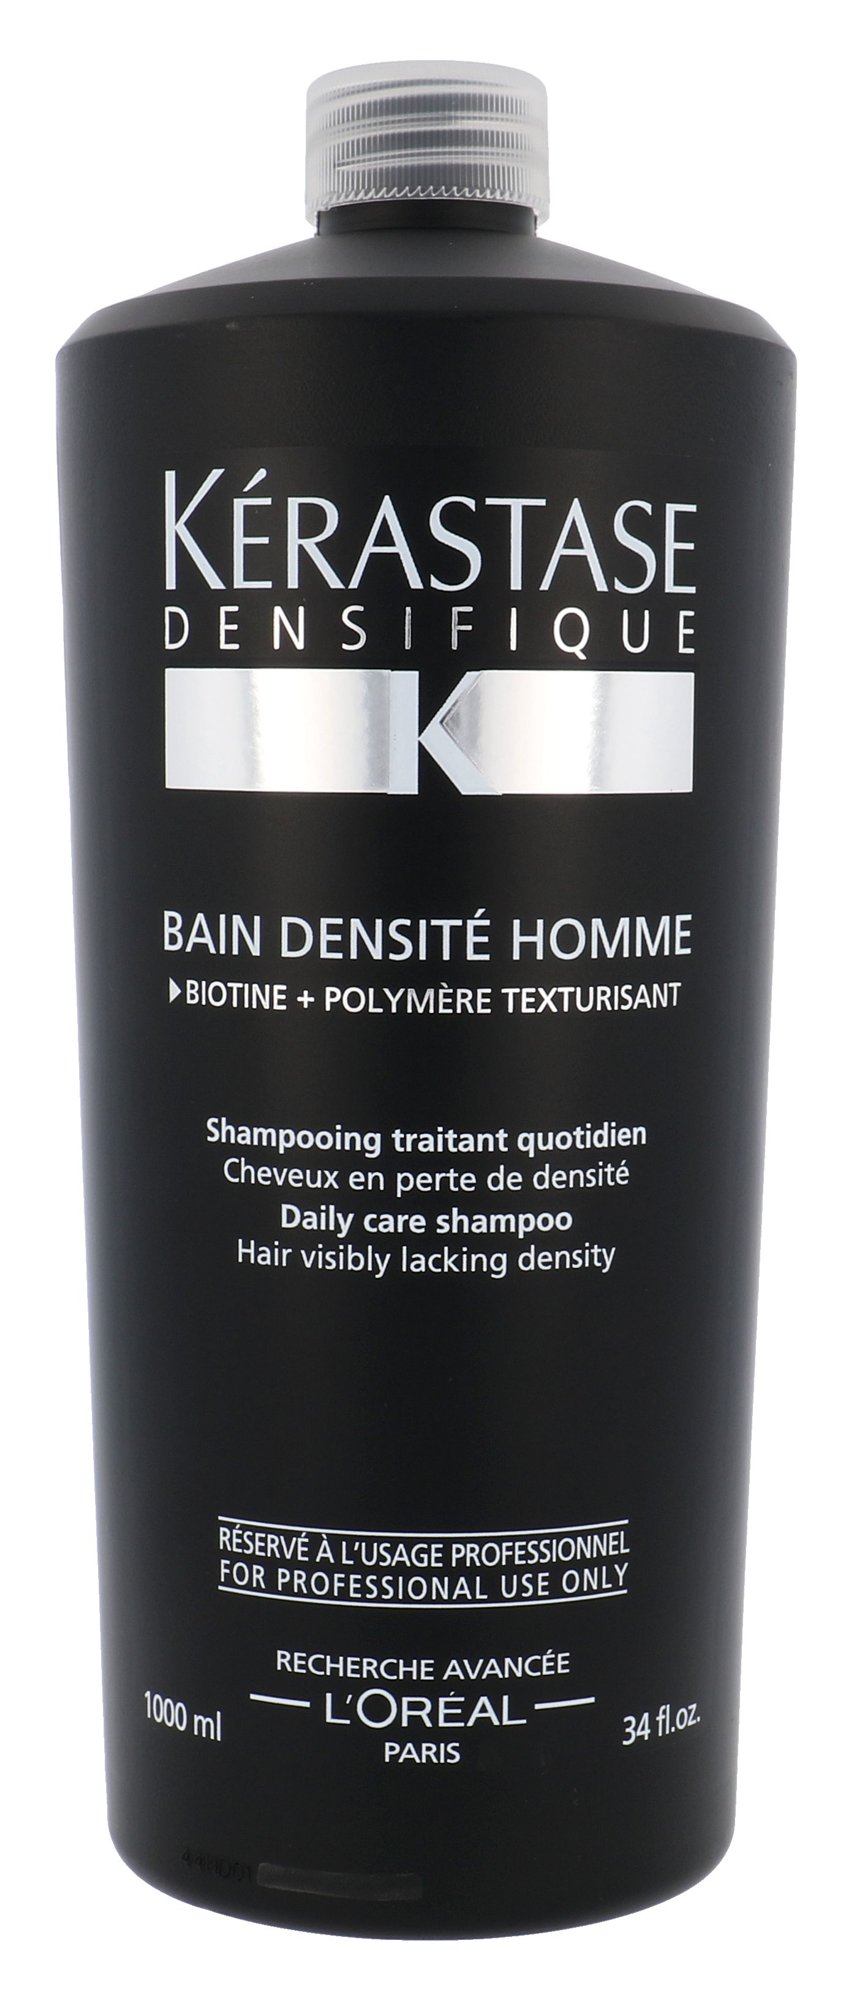 Kerastase Homme Densifique Bain Densité Shampoo